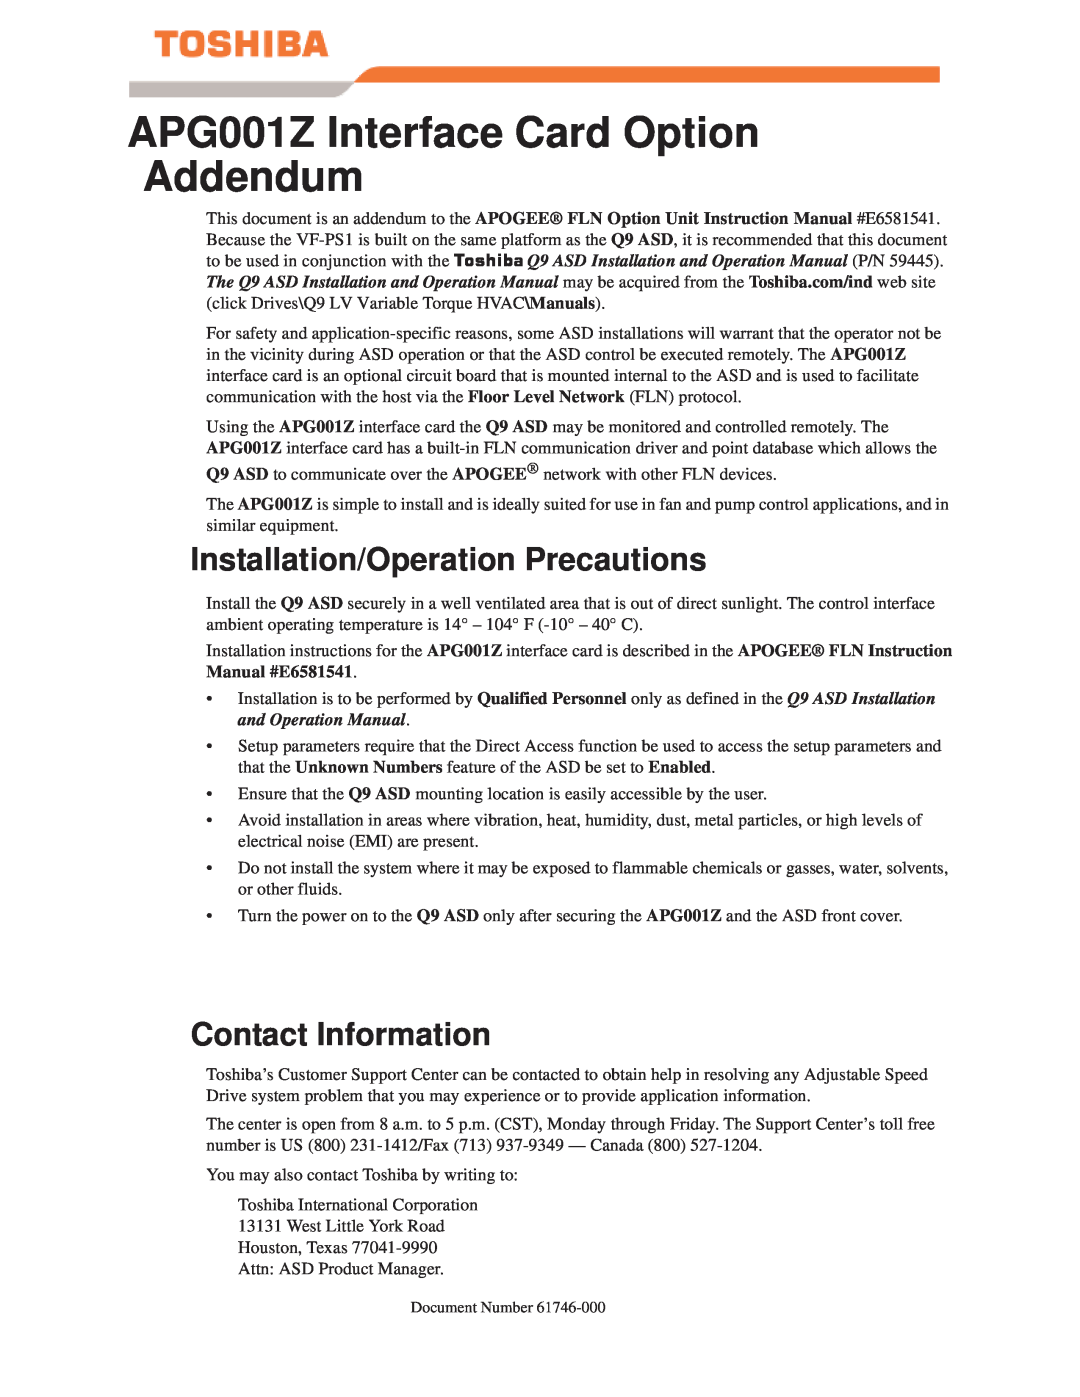 Toshiba instruction manual APG001Z Interface Card Option Addendum, Installation/Operation Precautions 